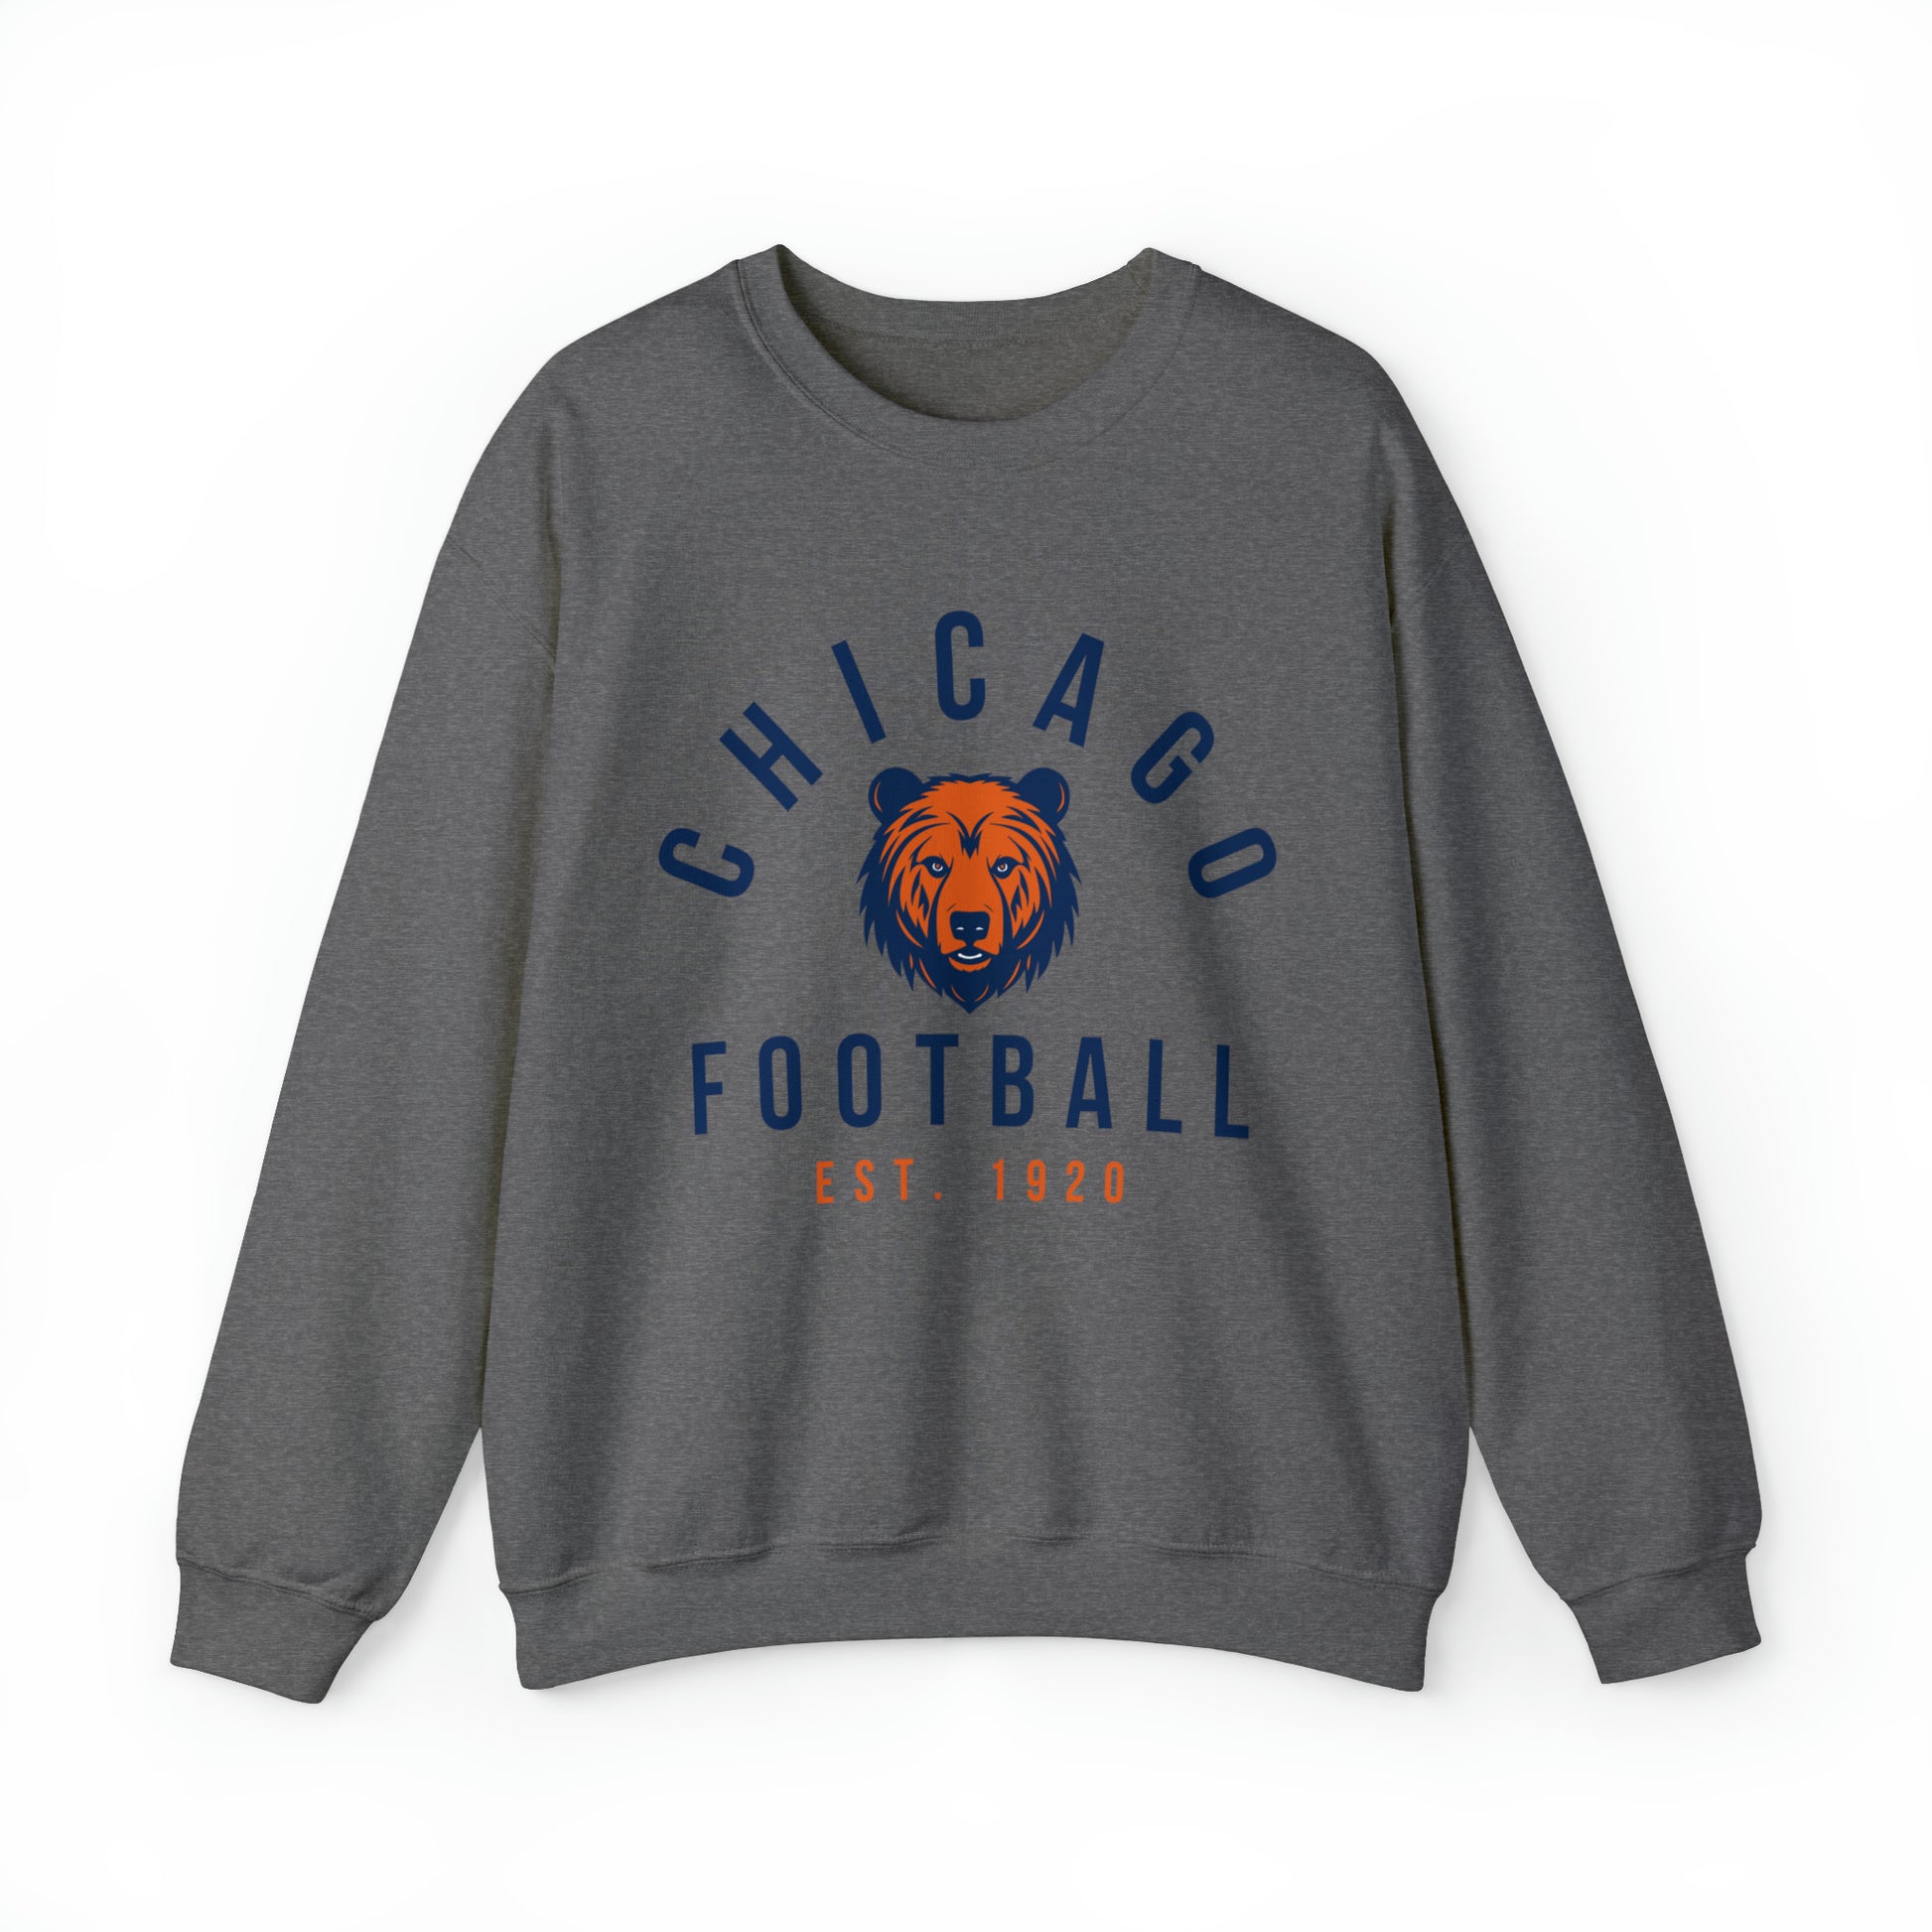 Dark Gray Chicago Bears Crewneck Sweatshirt - Vintage Football - Retro Style Football Apparel - Design 4